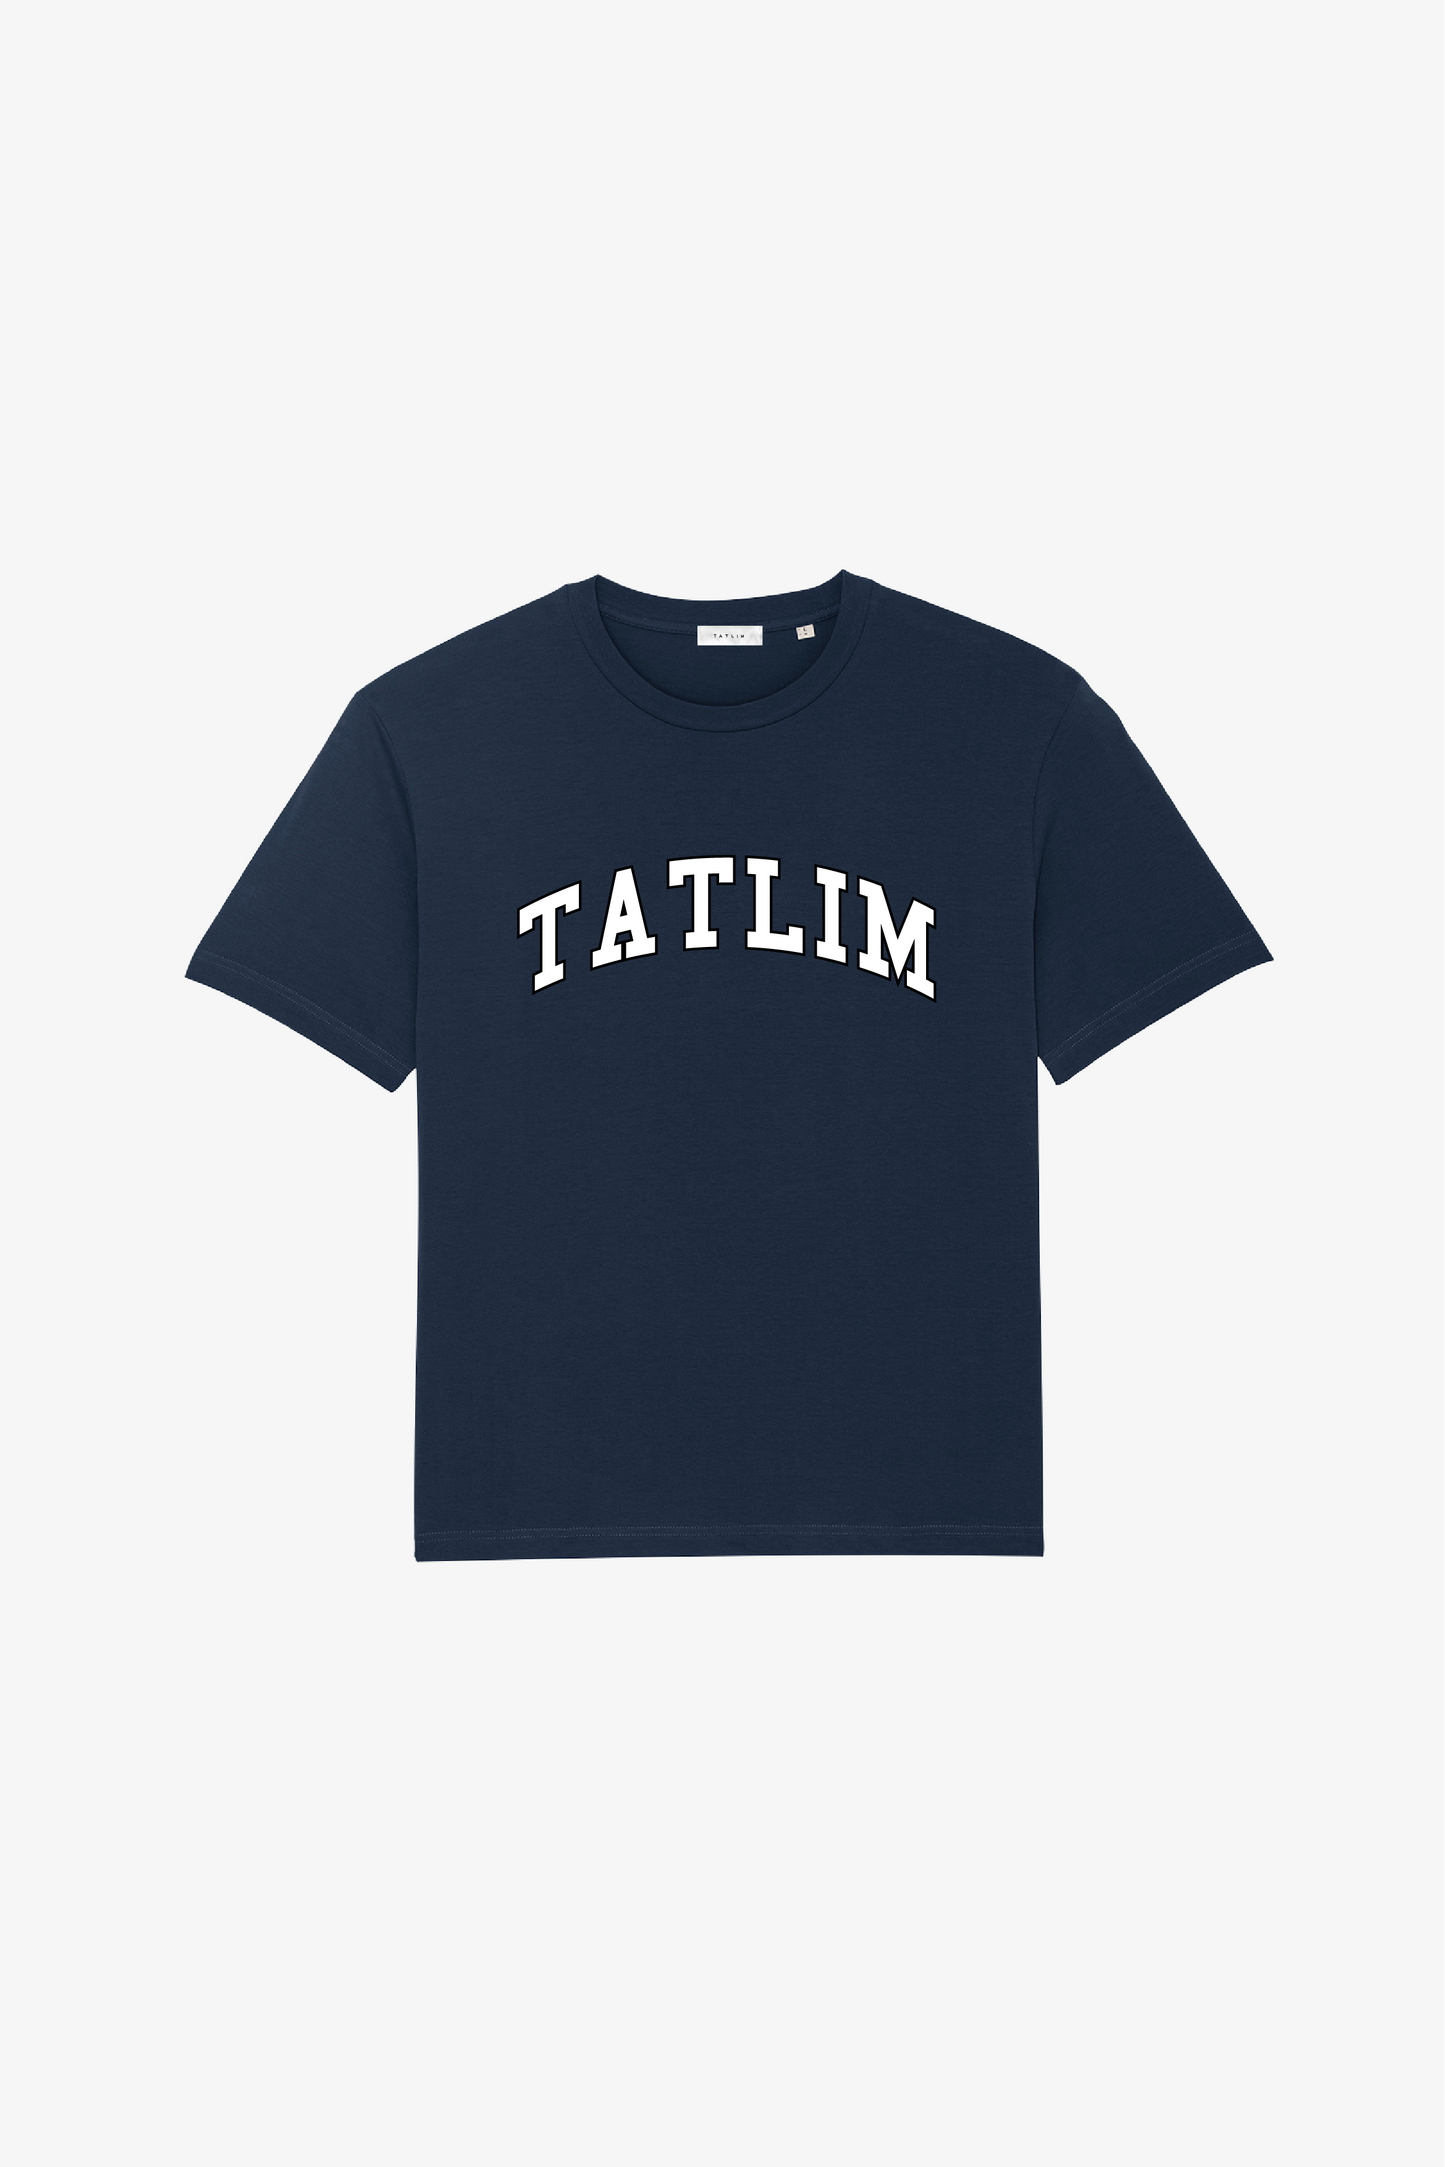 French Navy Tatlim College T Shirt